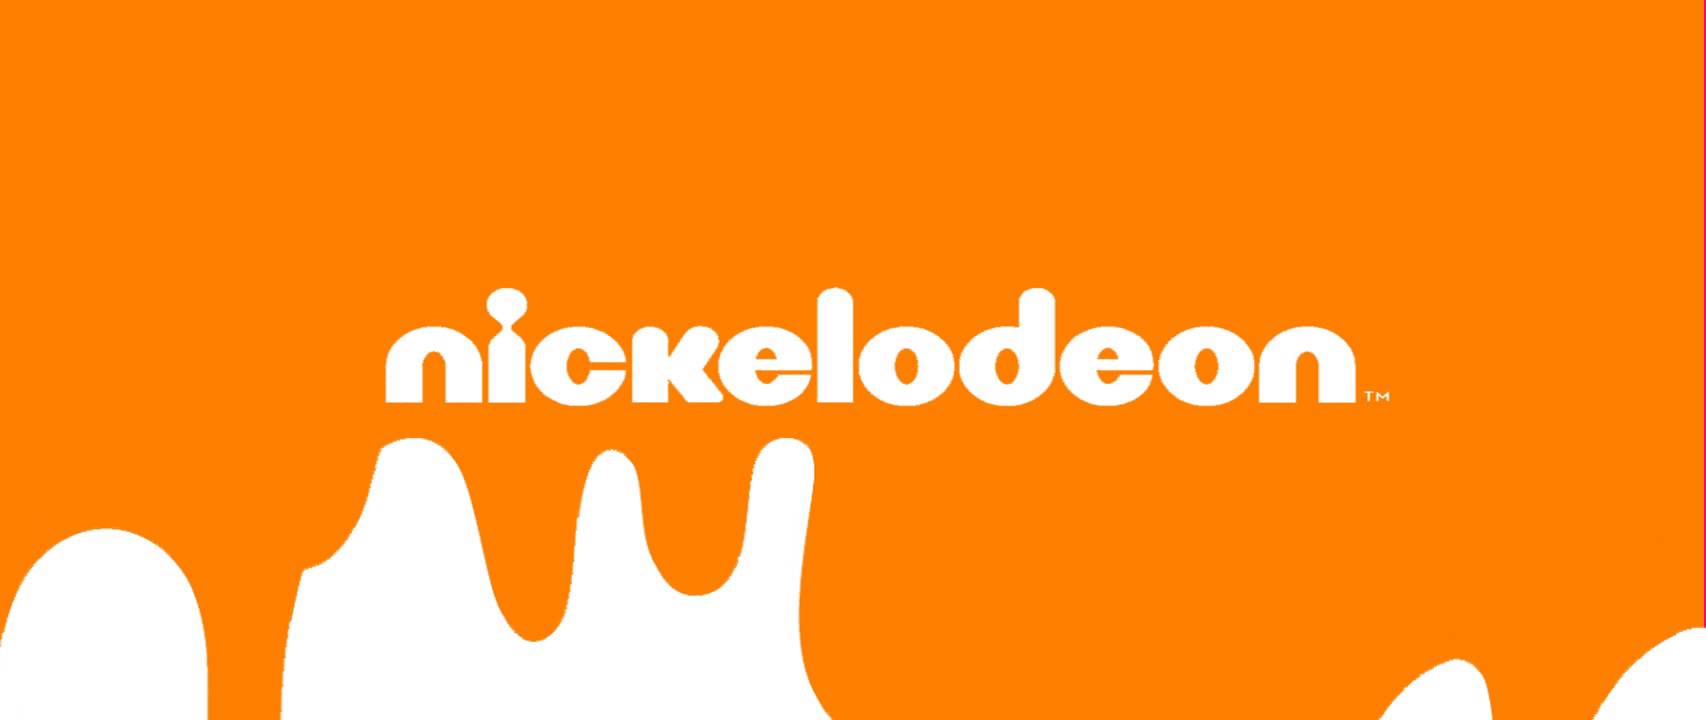 Никелодеон ру. Канал Nickelodeon. Телеканал Никелодеон. Nickelodeon лого. Логотип Никелодеон 2020.